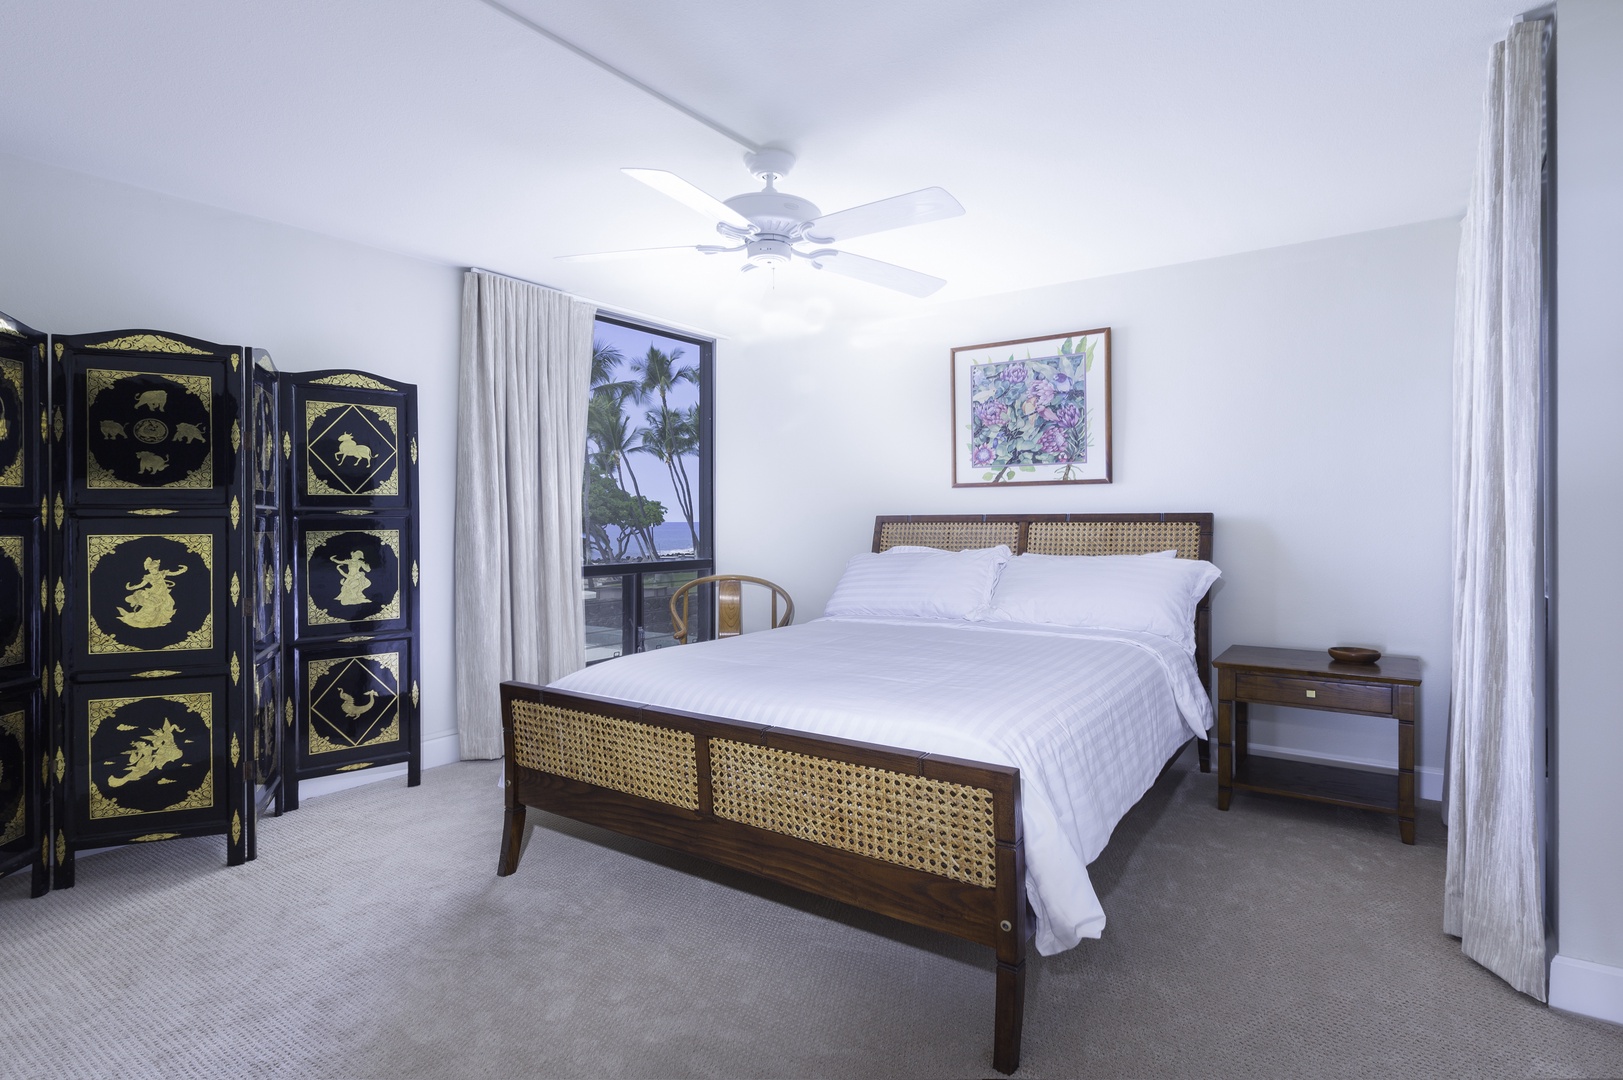 Kailua Kona Vacation Rentals, Kona By The Sea (Big Island) - Guest Bedroom with Ocean Views